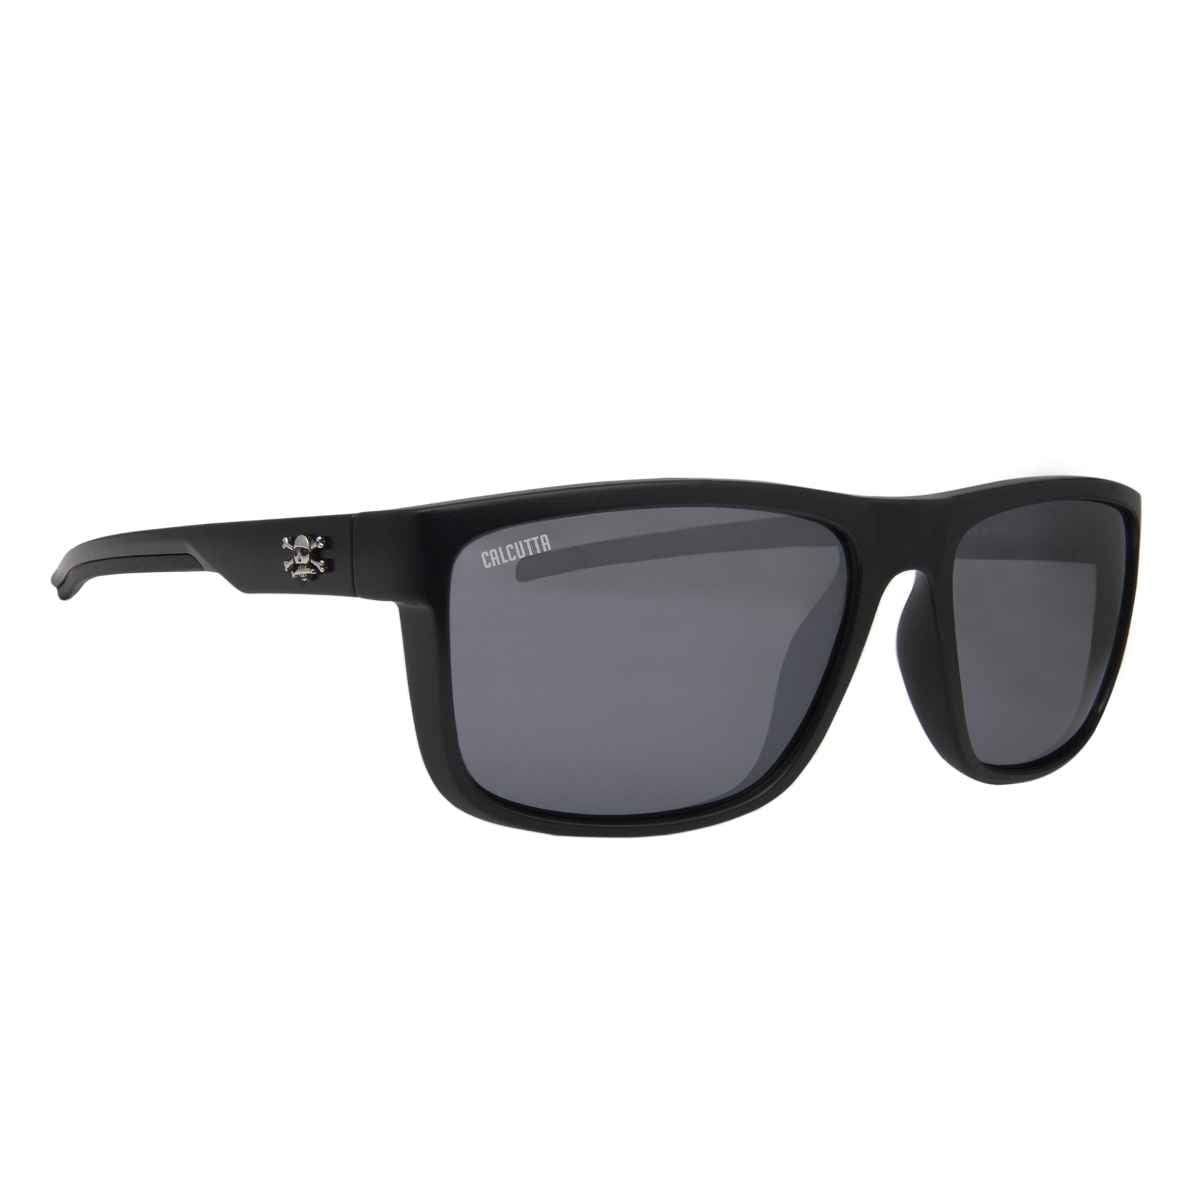 Calcutta Outdoors H1SM Hampton Sunglasses Matte Black Frame Silver Mirror  Lens - H1SM 